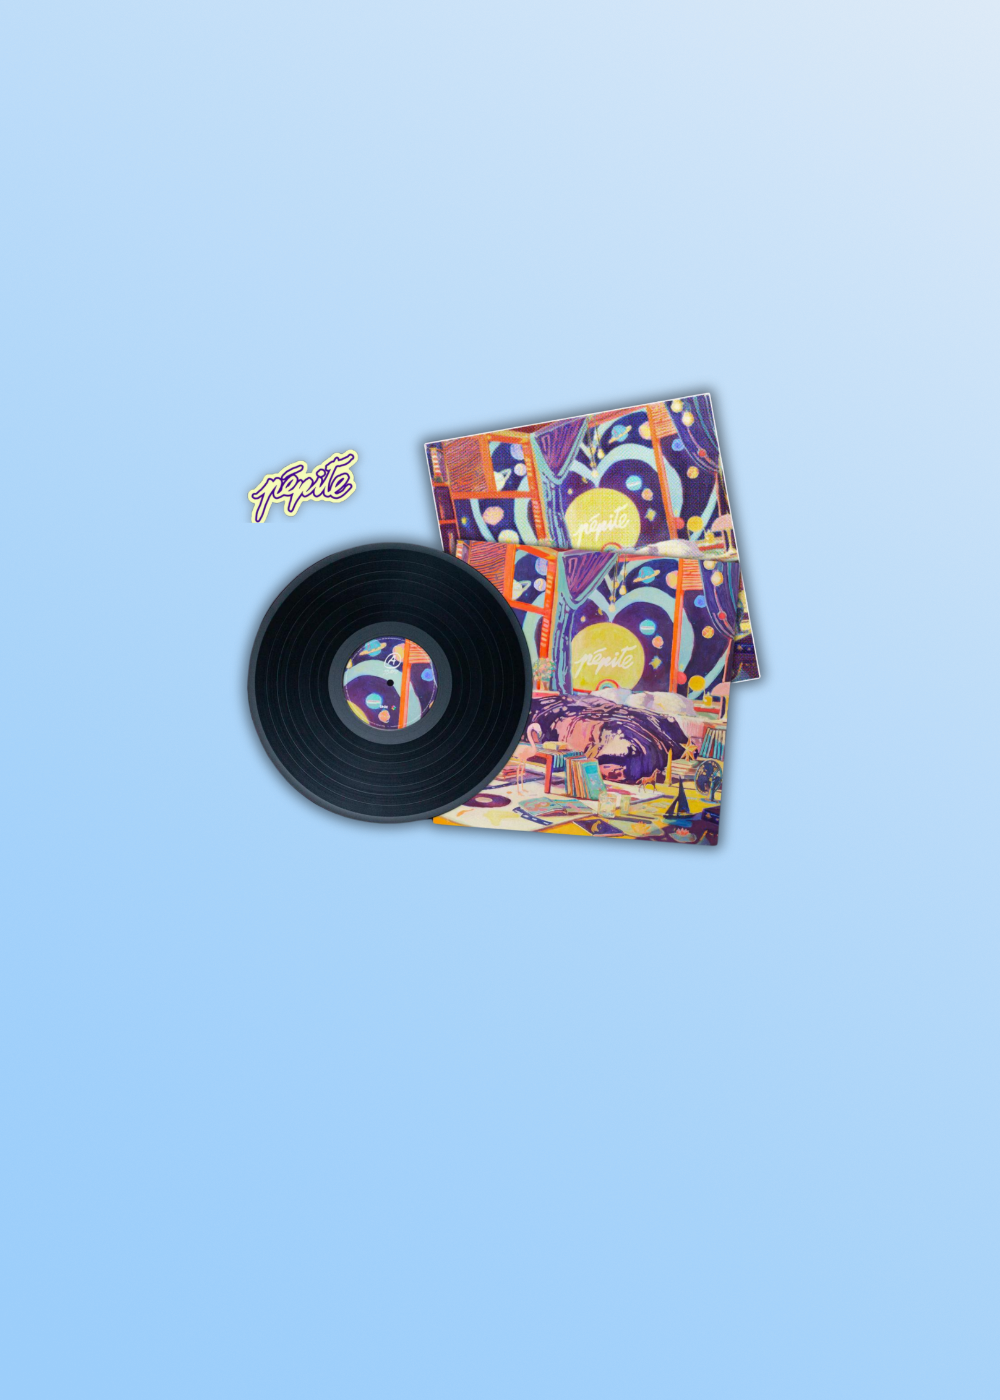  Disques vinyles - CD - Merchandising - Musique